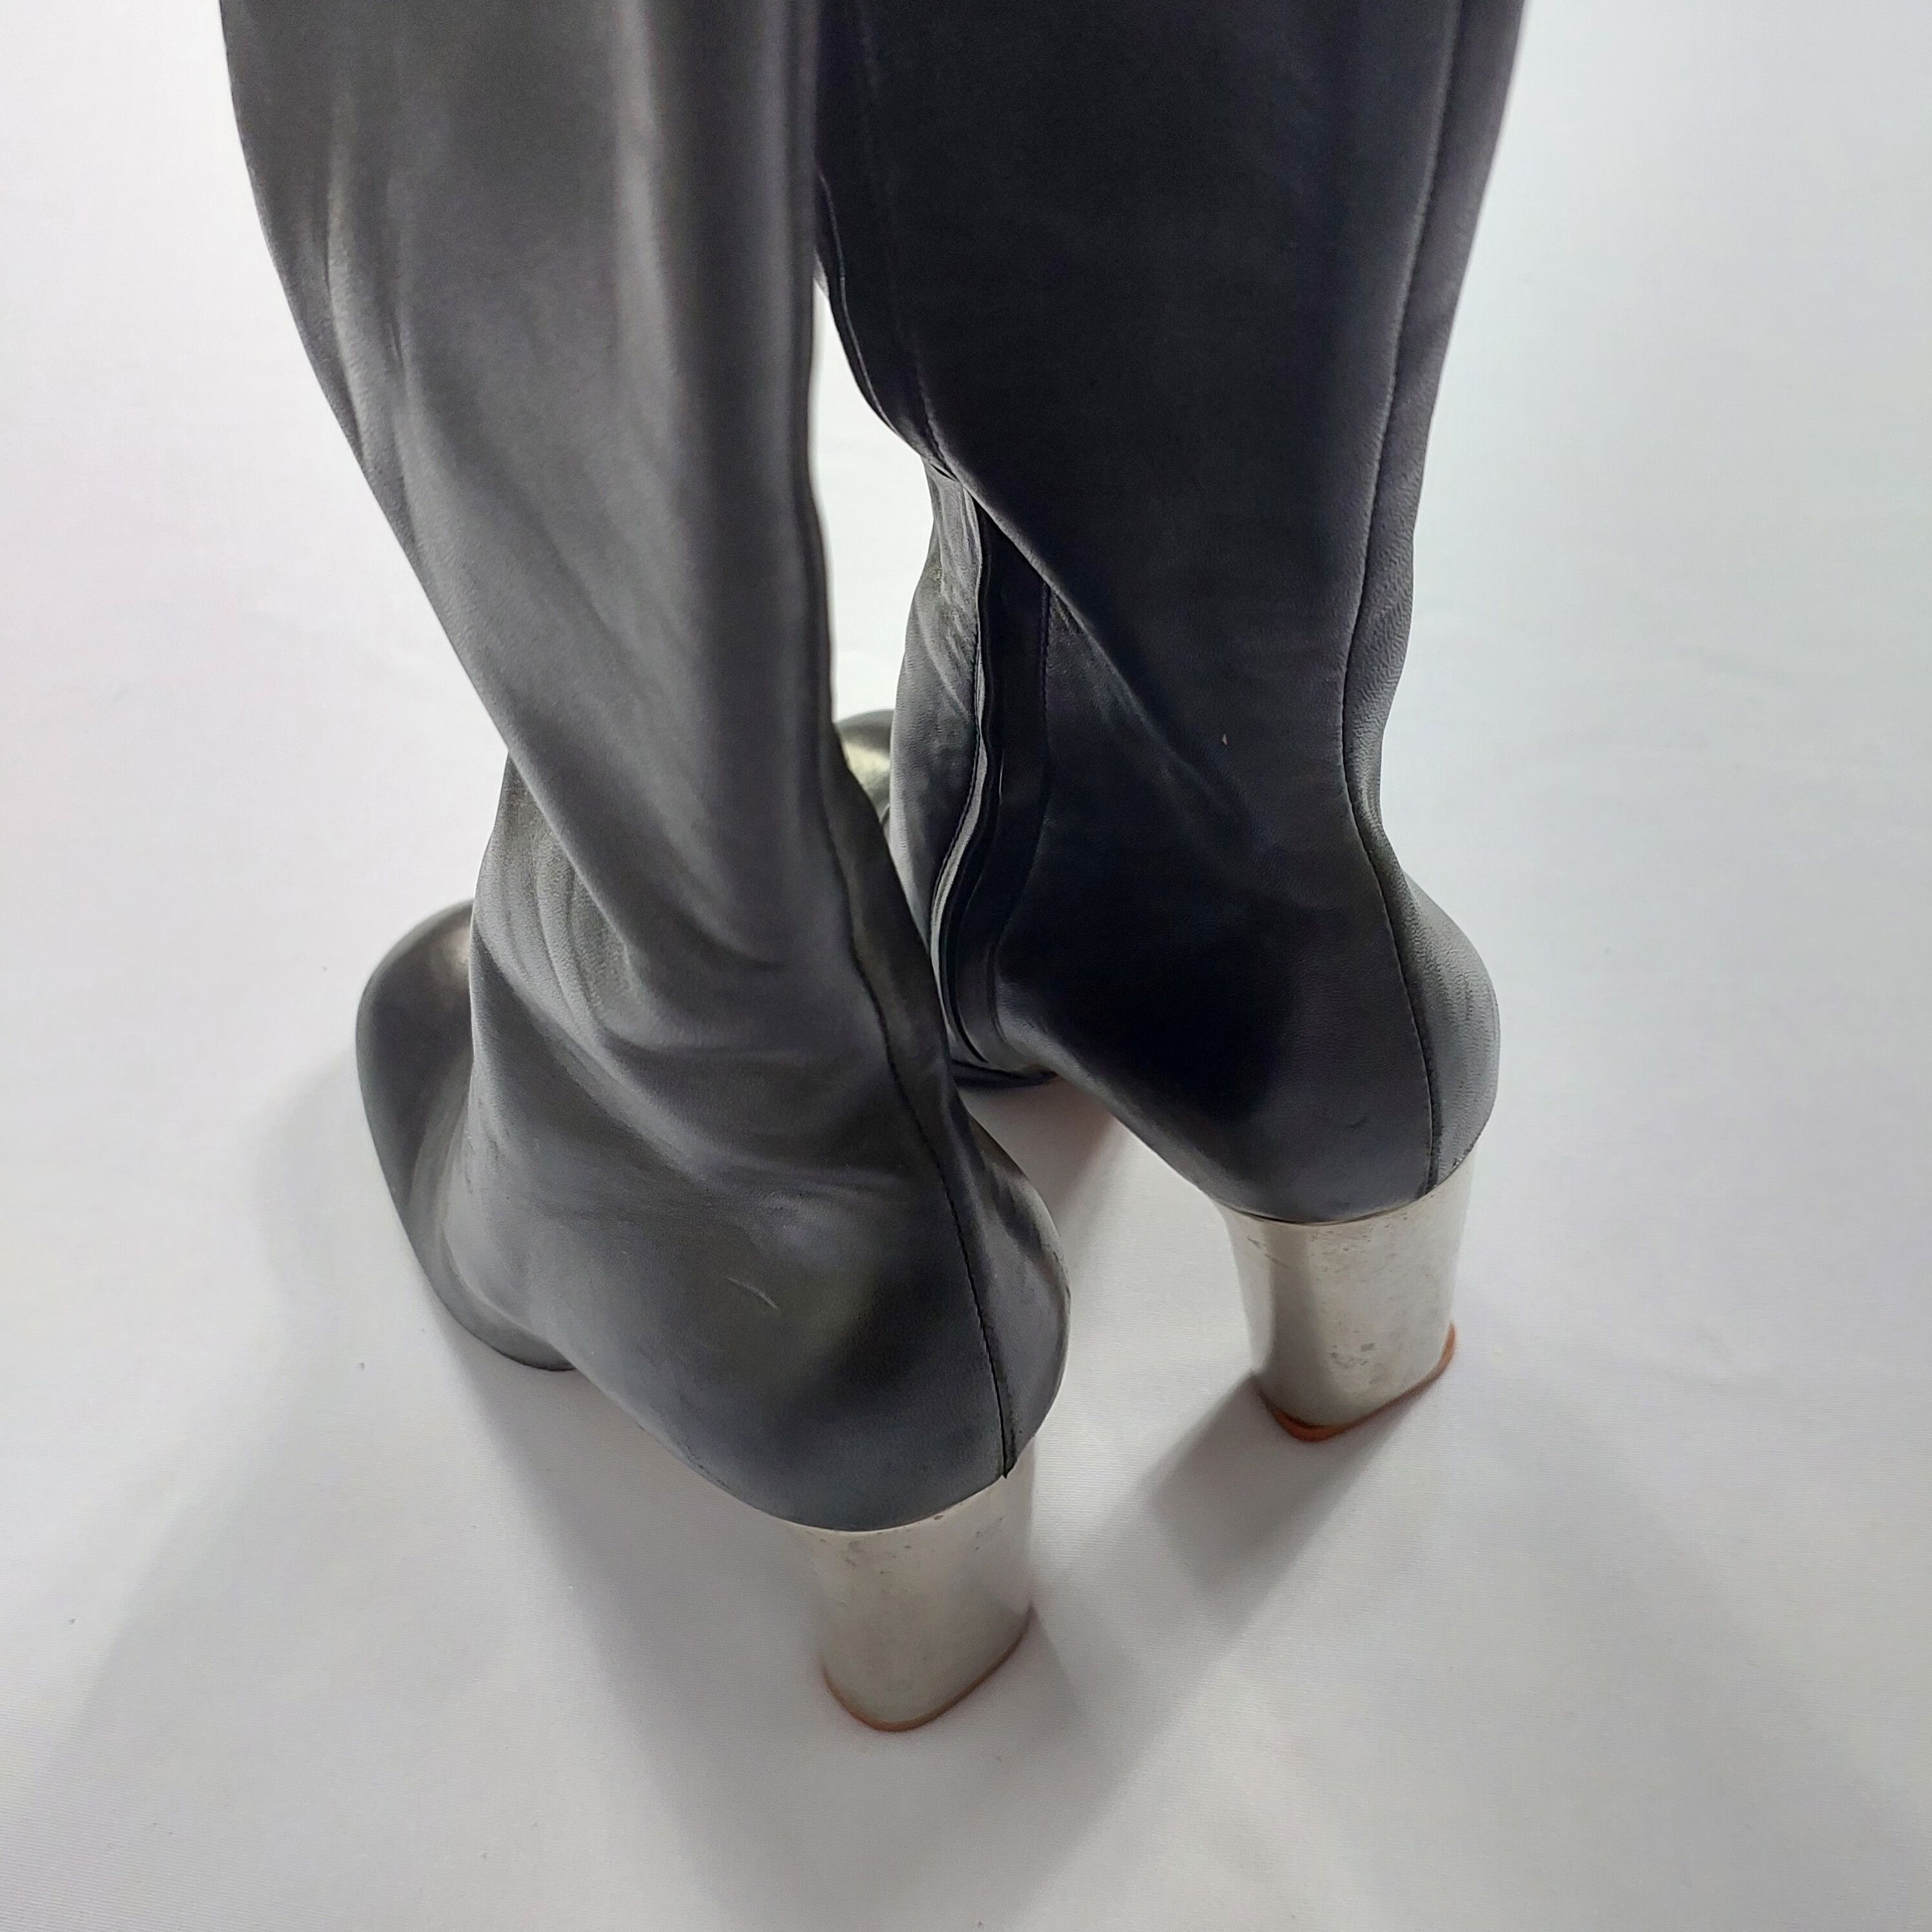 Celine - Phoebe Philo - Tall Boots - 4